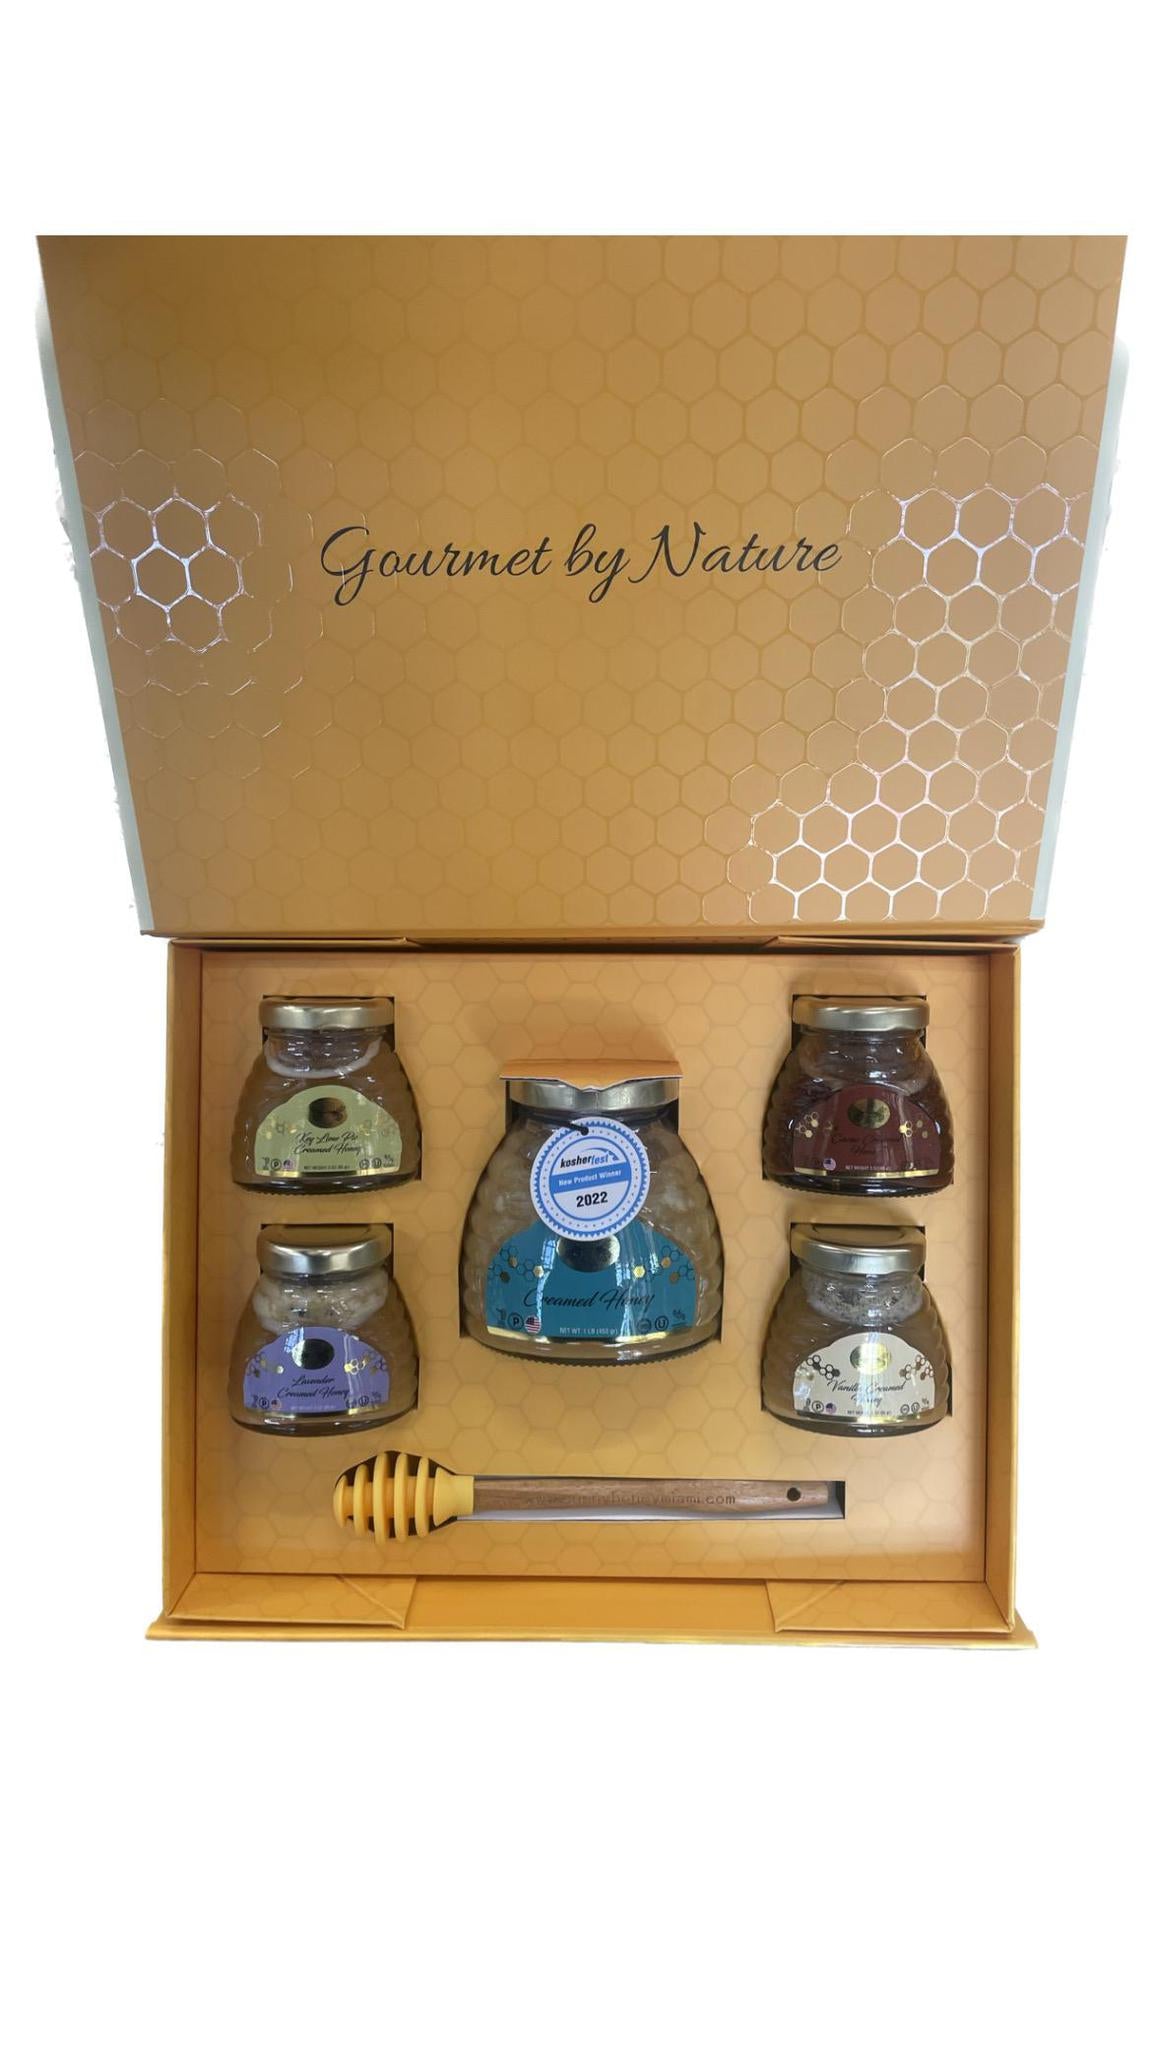 Sunny Honey Gift Box (1 Count)